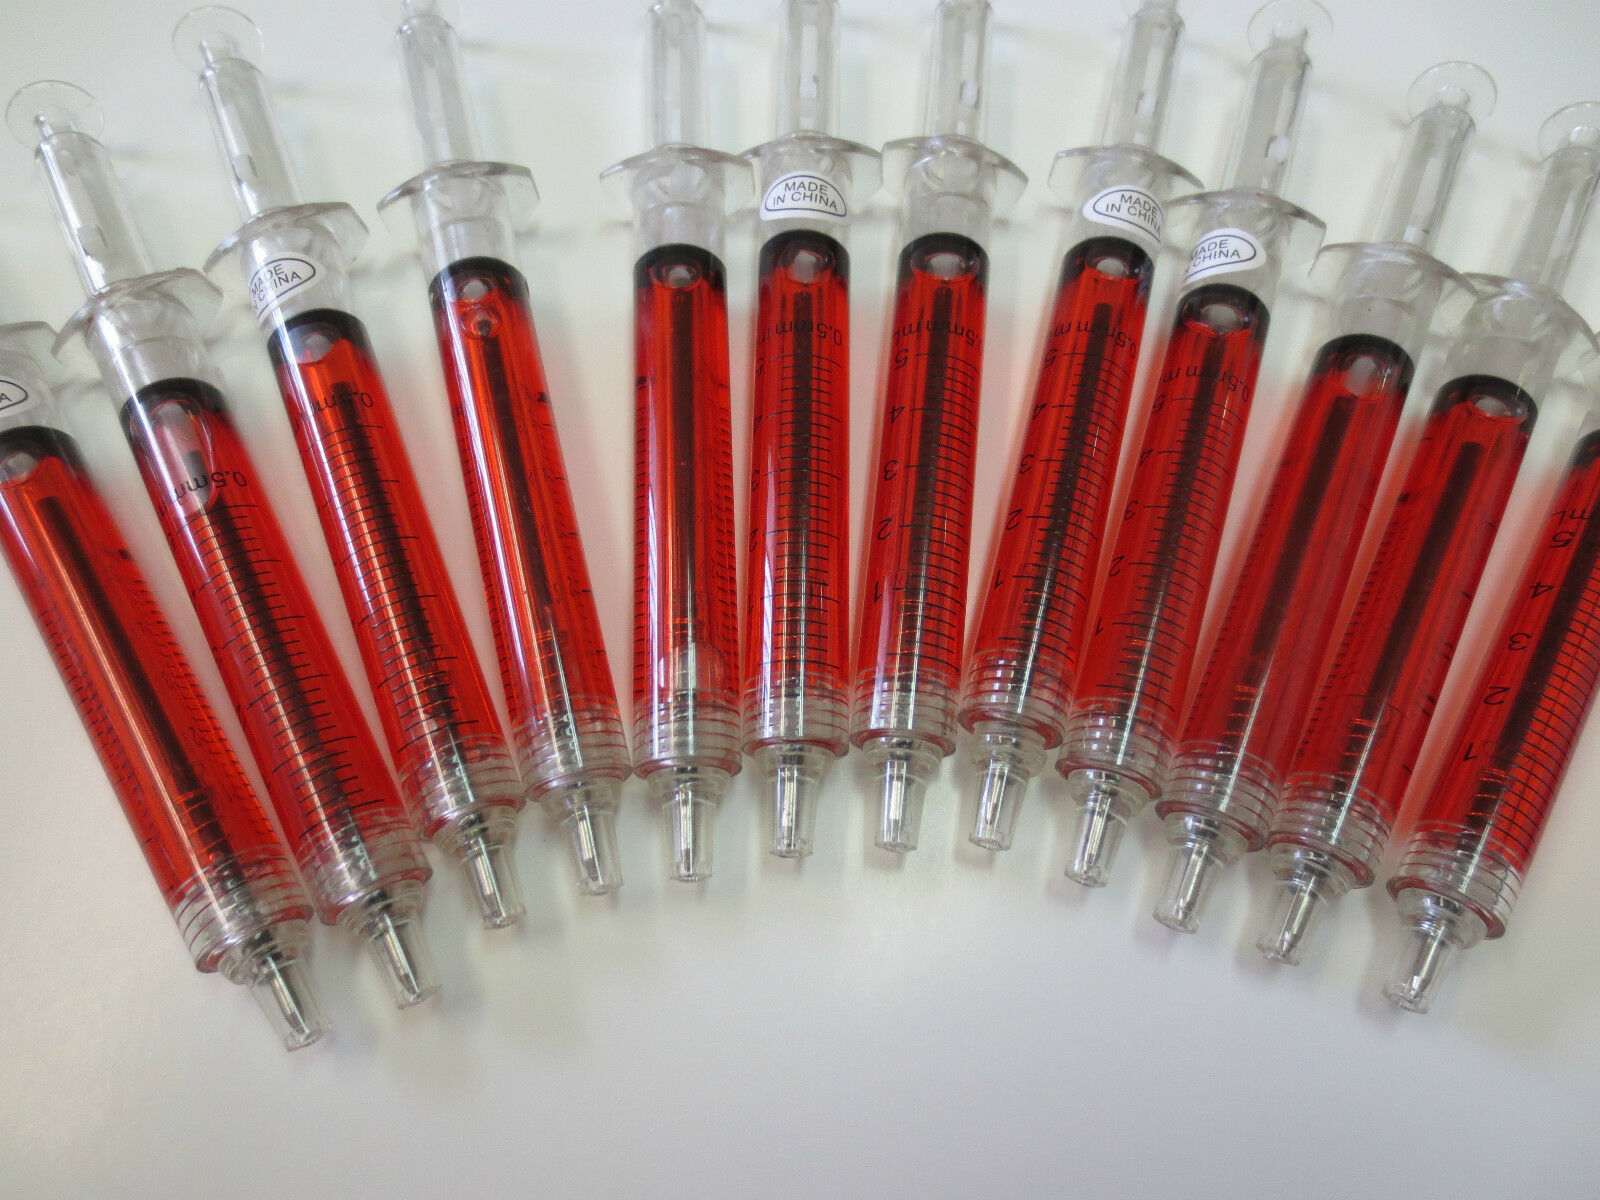 Lot 60 Red Syringe Shape Pens Ball Point Pen For Hospital Nurse /black Ink/ New